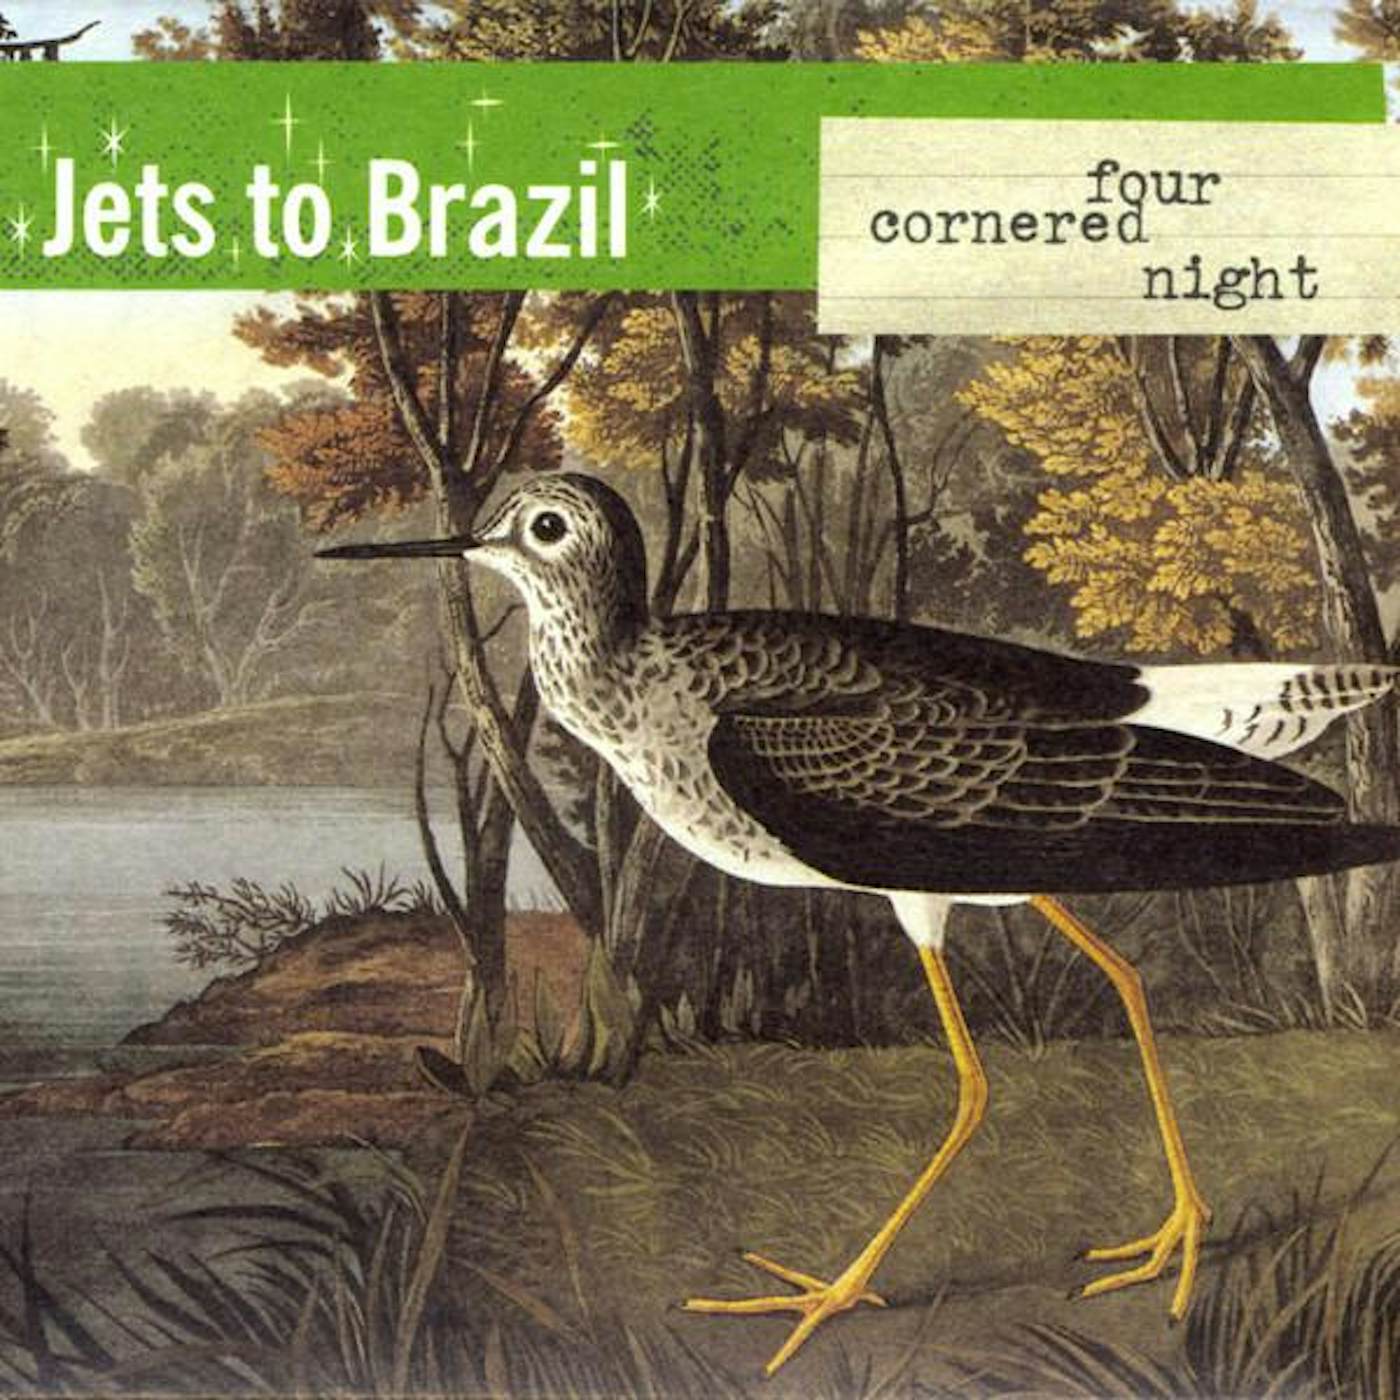 Jets To Brazil FOUR CORNERED NIGHT (2LP/180G) Vinyl Record